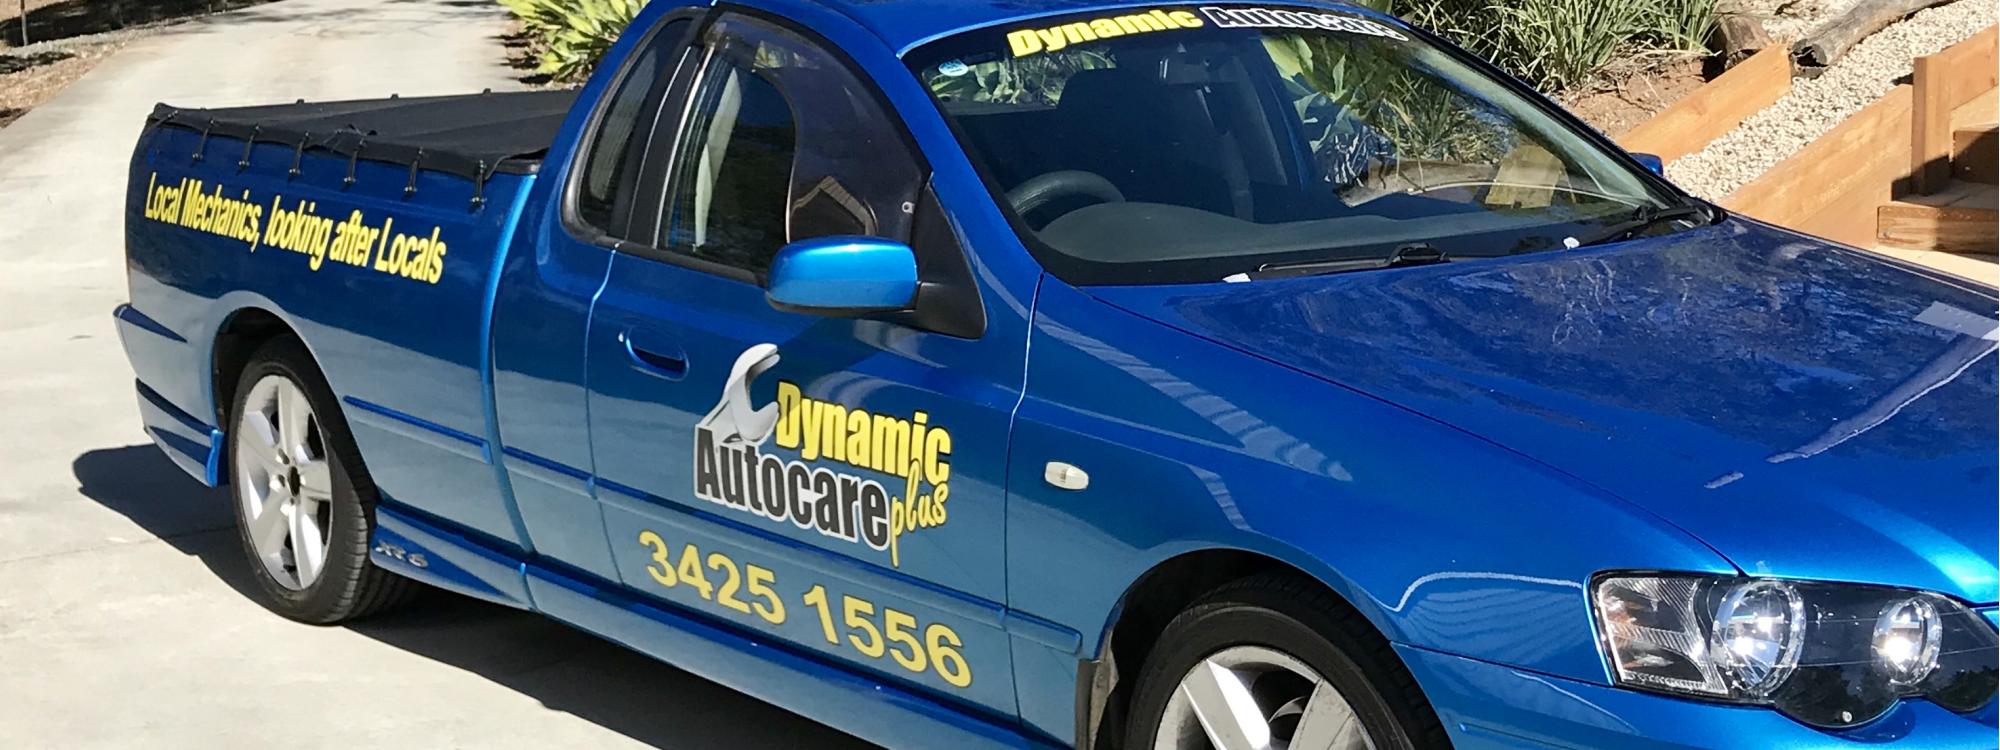 Vehicle Signage for Dynamic Autocare Plus